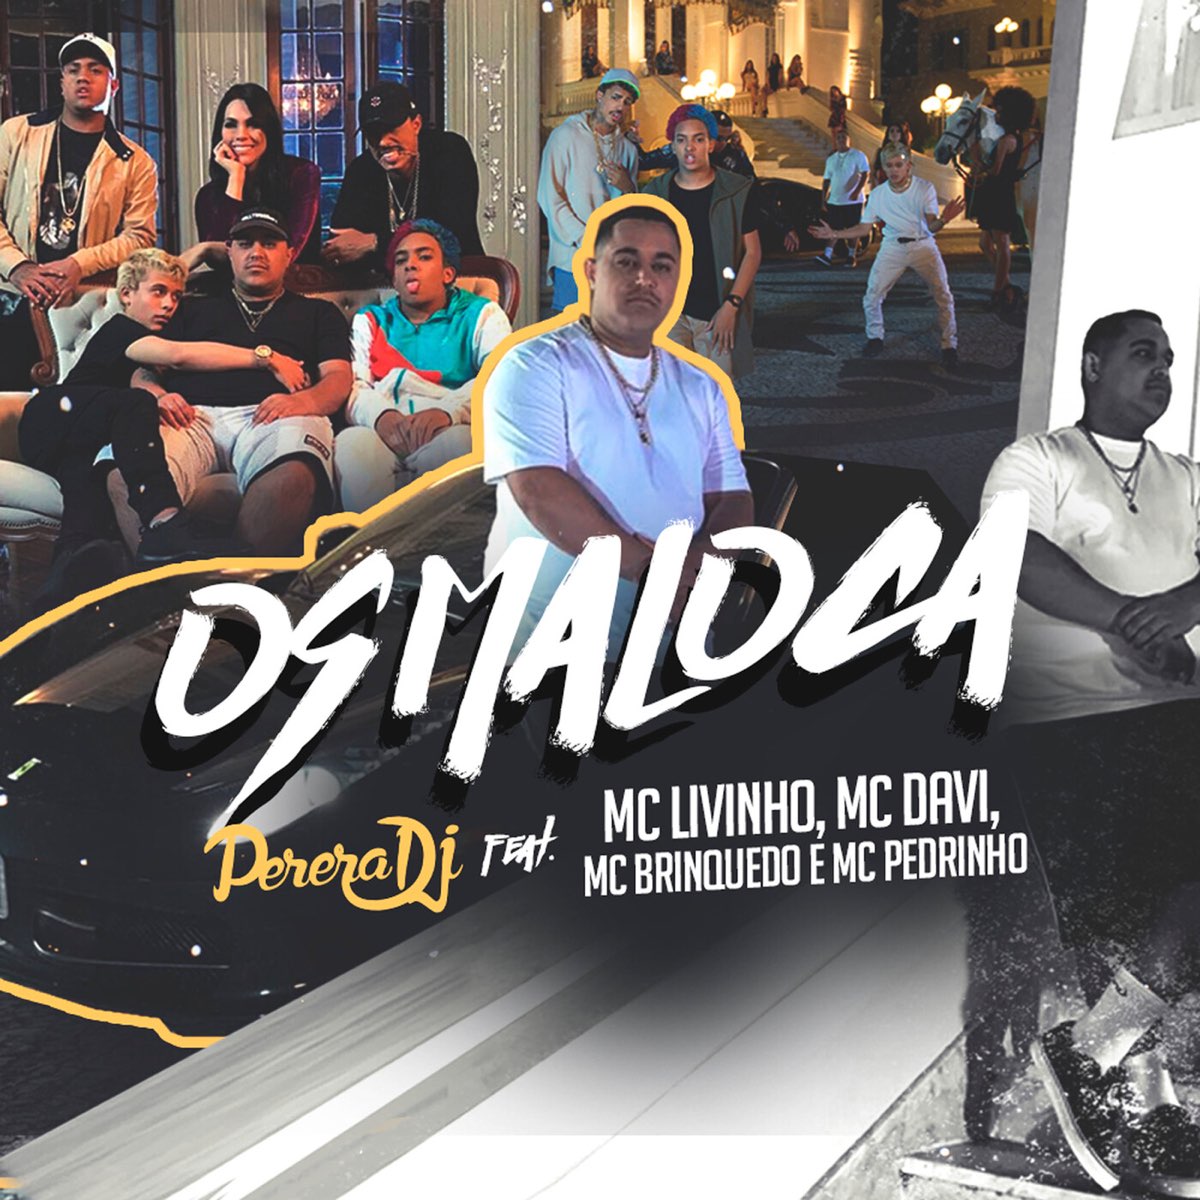 Os Maloca (feat. MC Livinho, Mc Davi, Mc Brinquedo & Mc Pedrinho) - Single  by Perera DJ on Apple Music